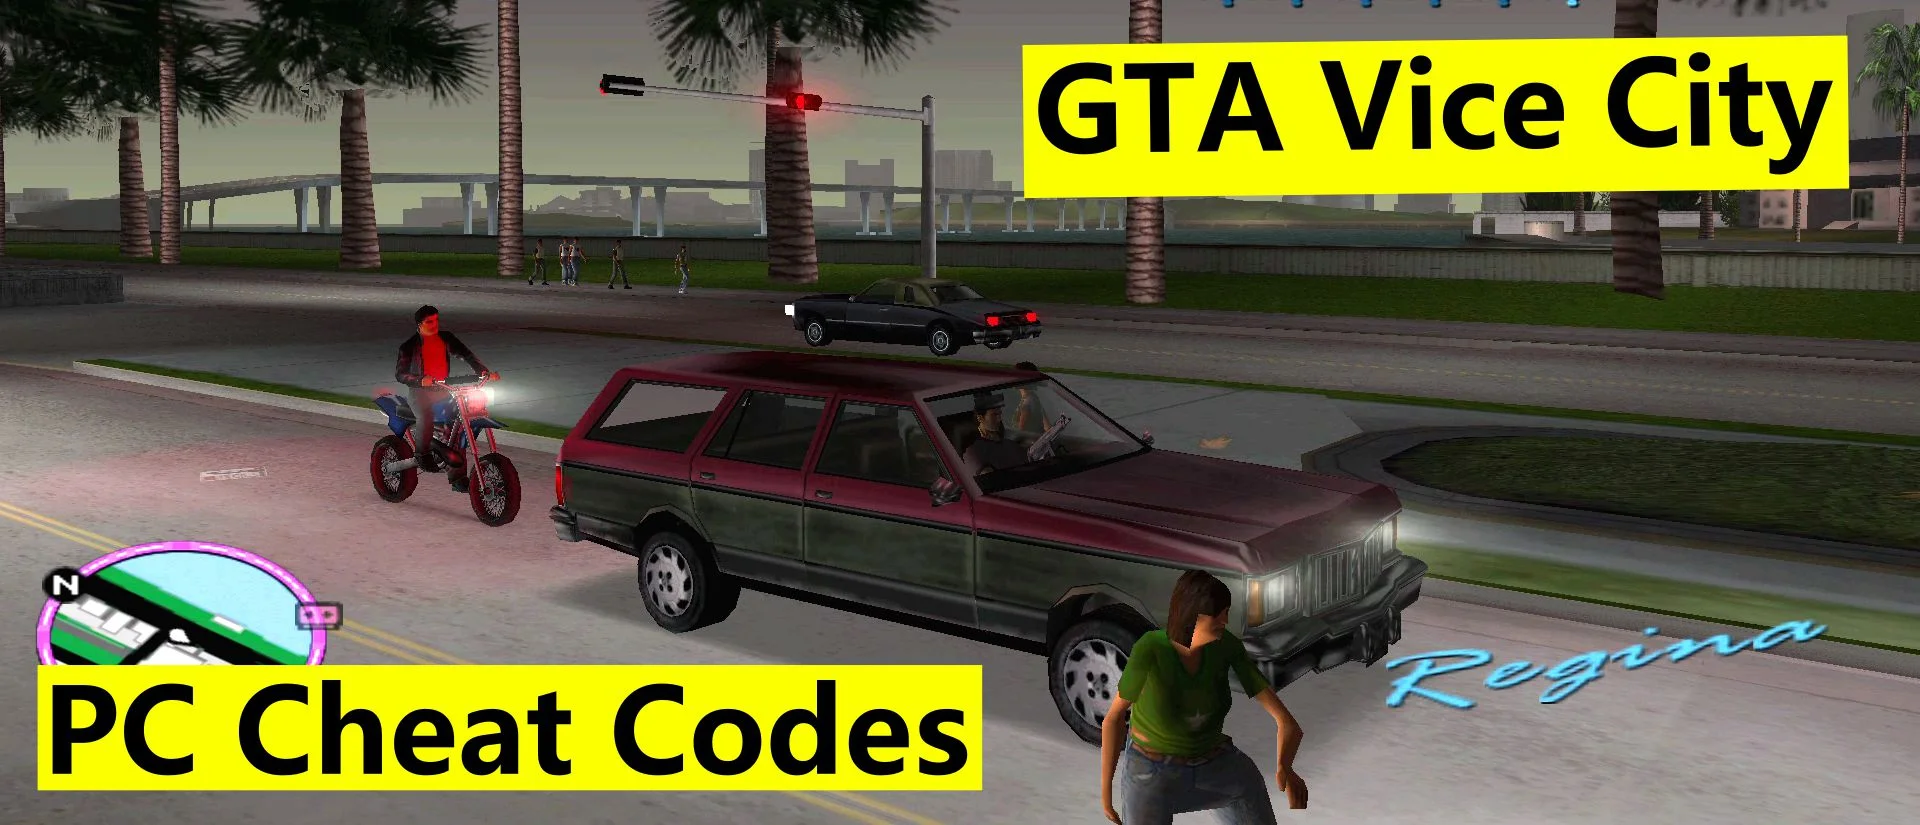 Gta Acheat Codes, PDF, Cheating In Video Games